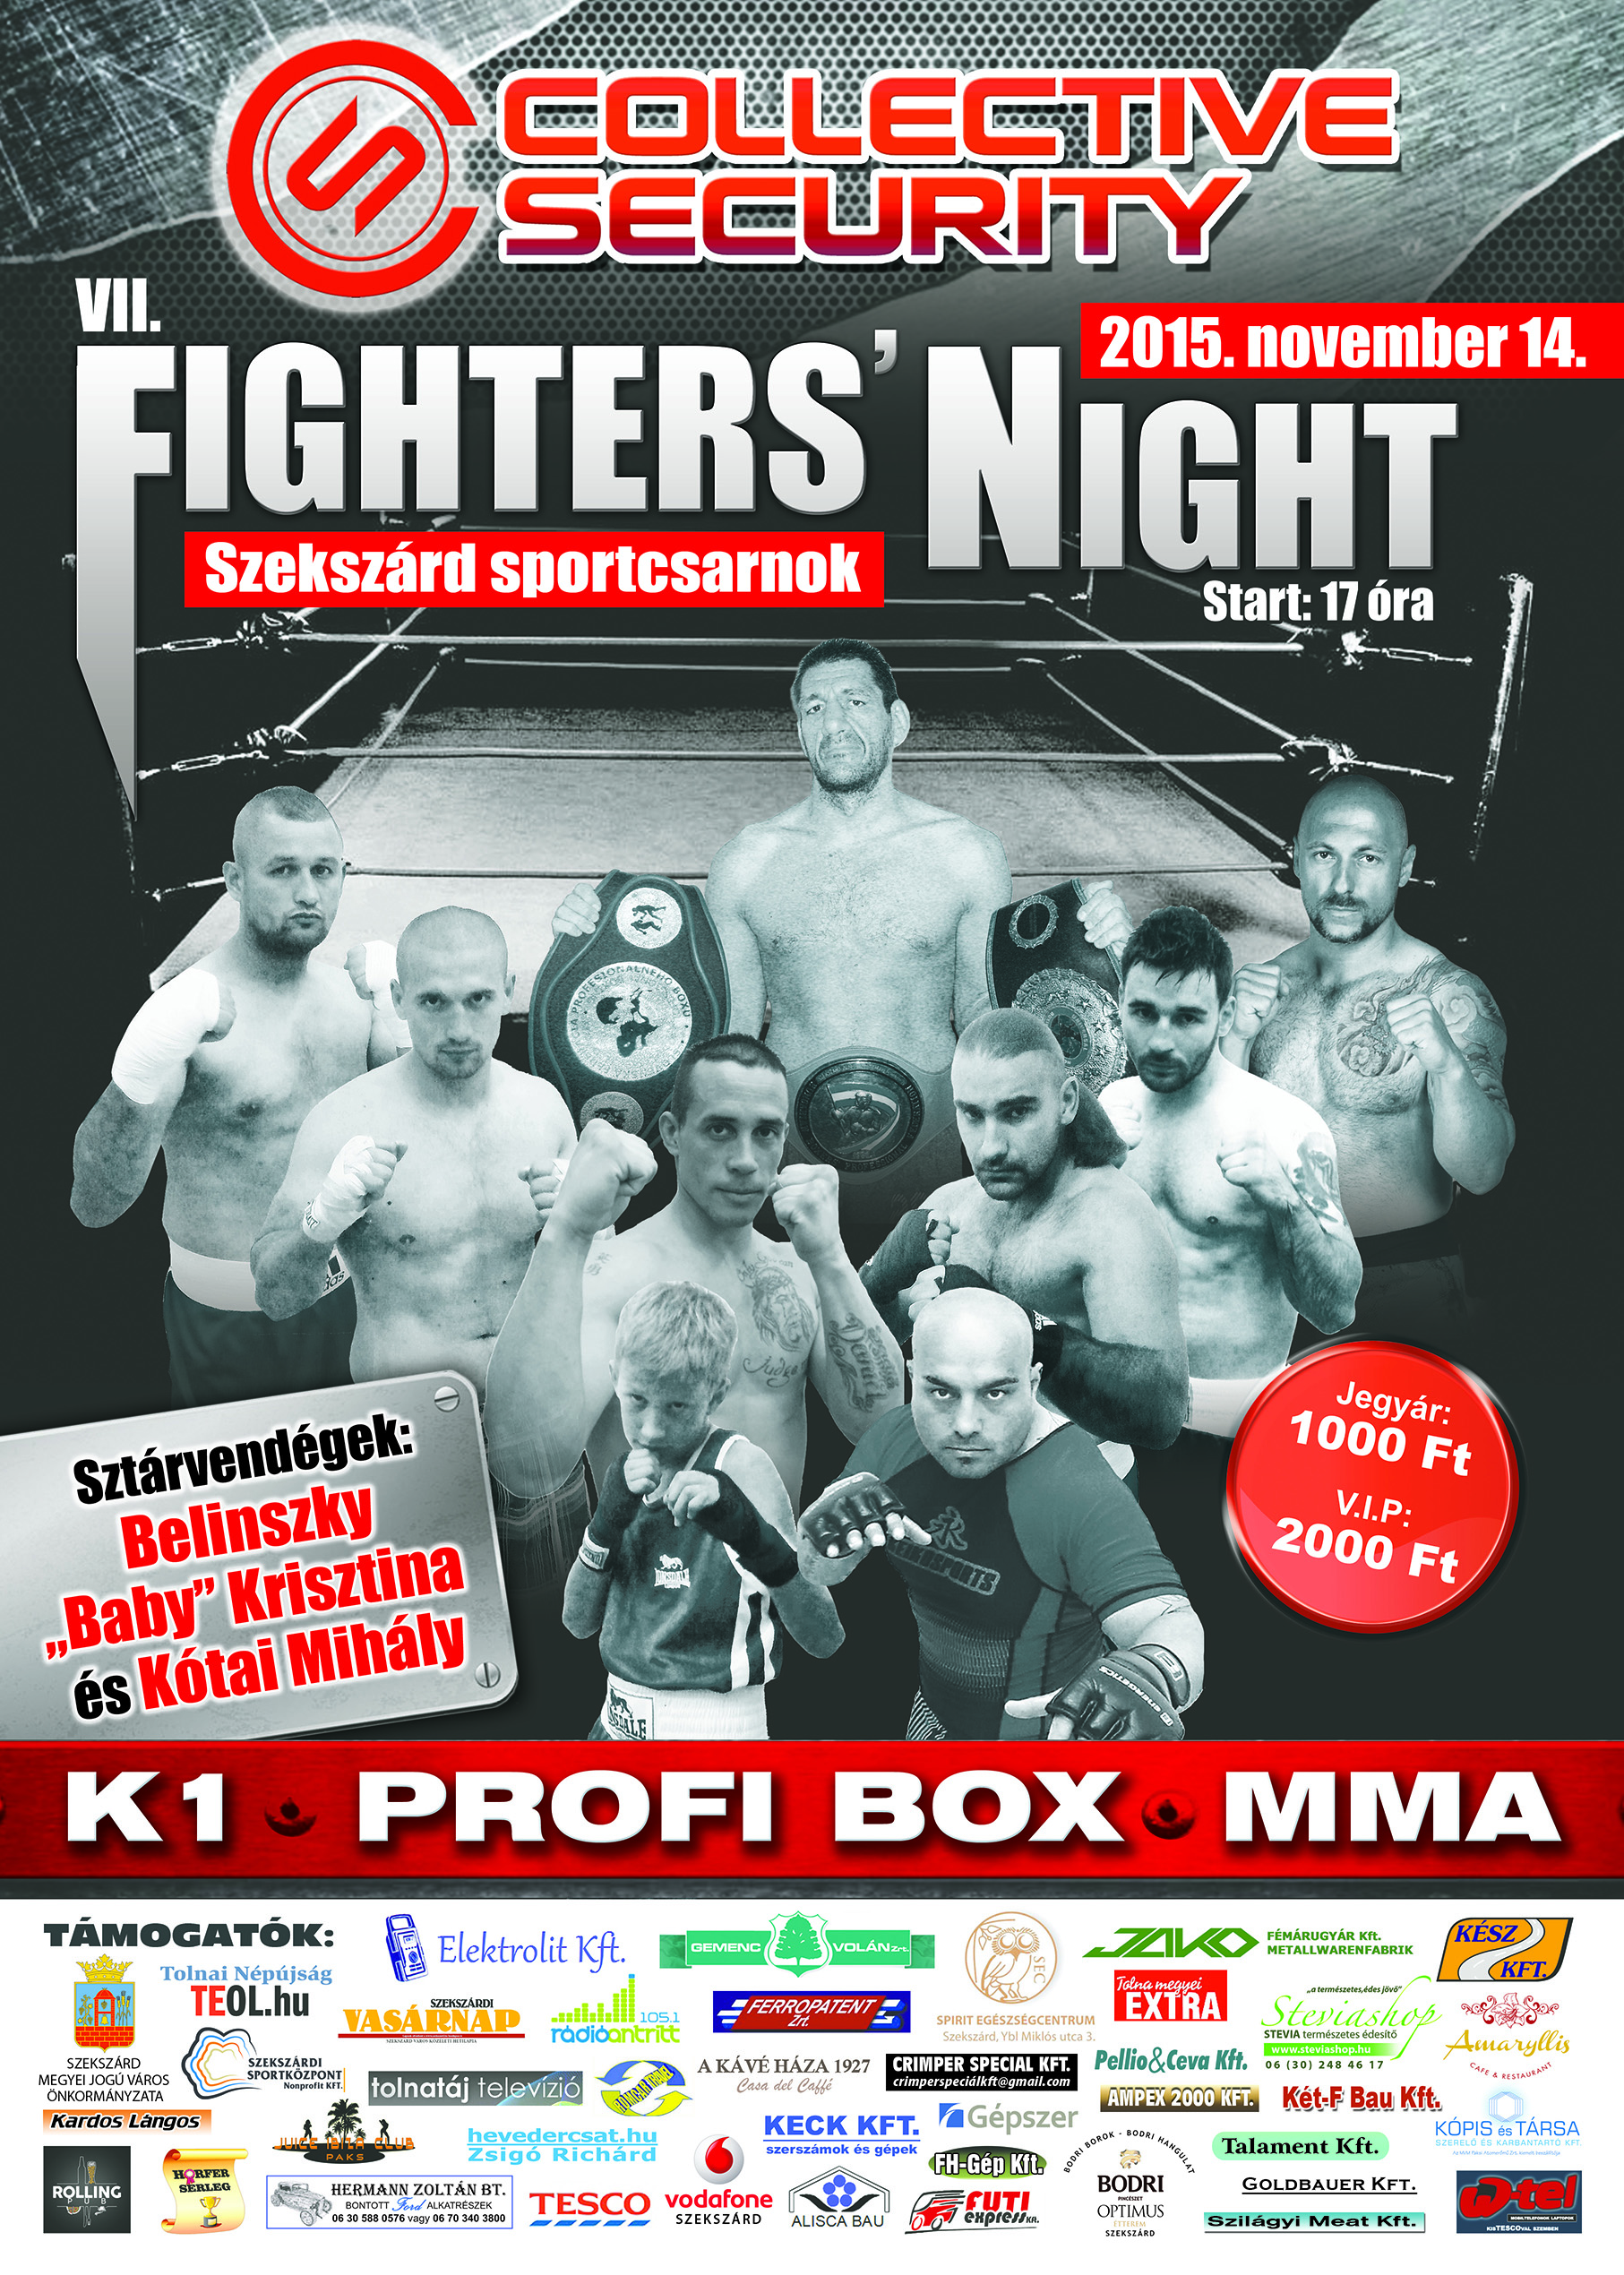 VII. Fighters Night